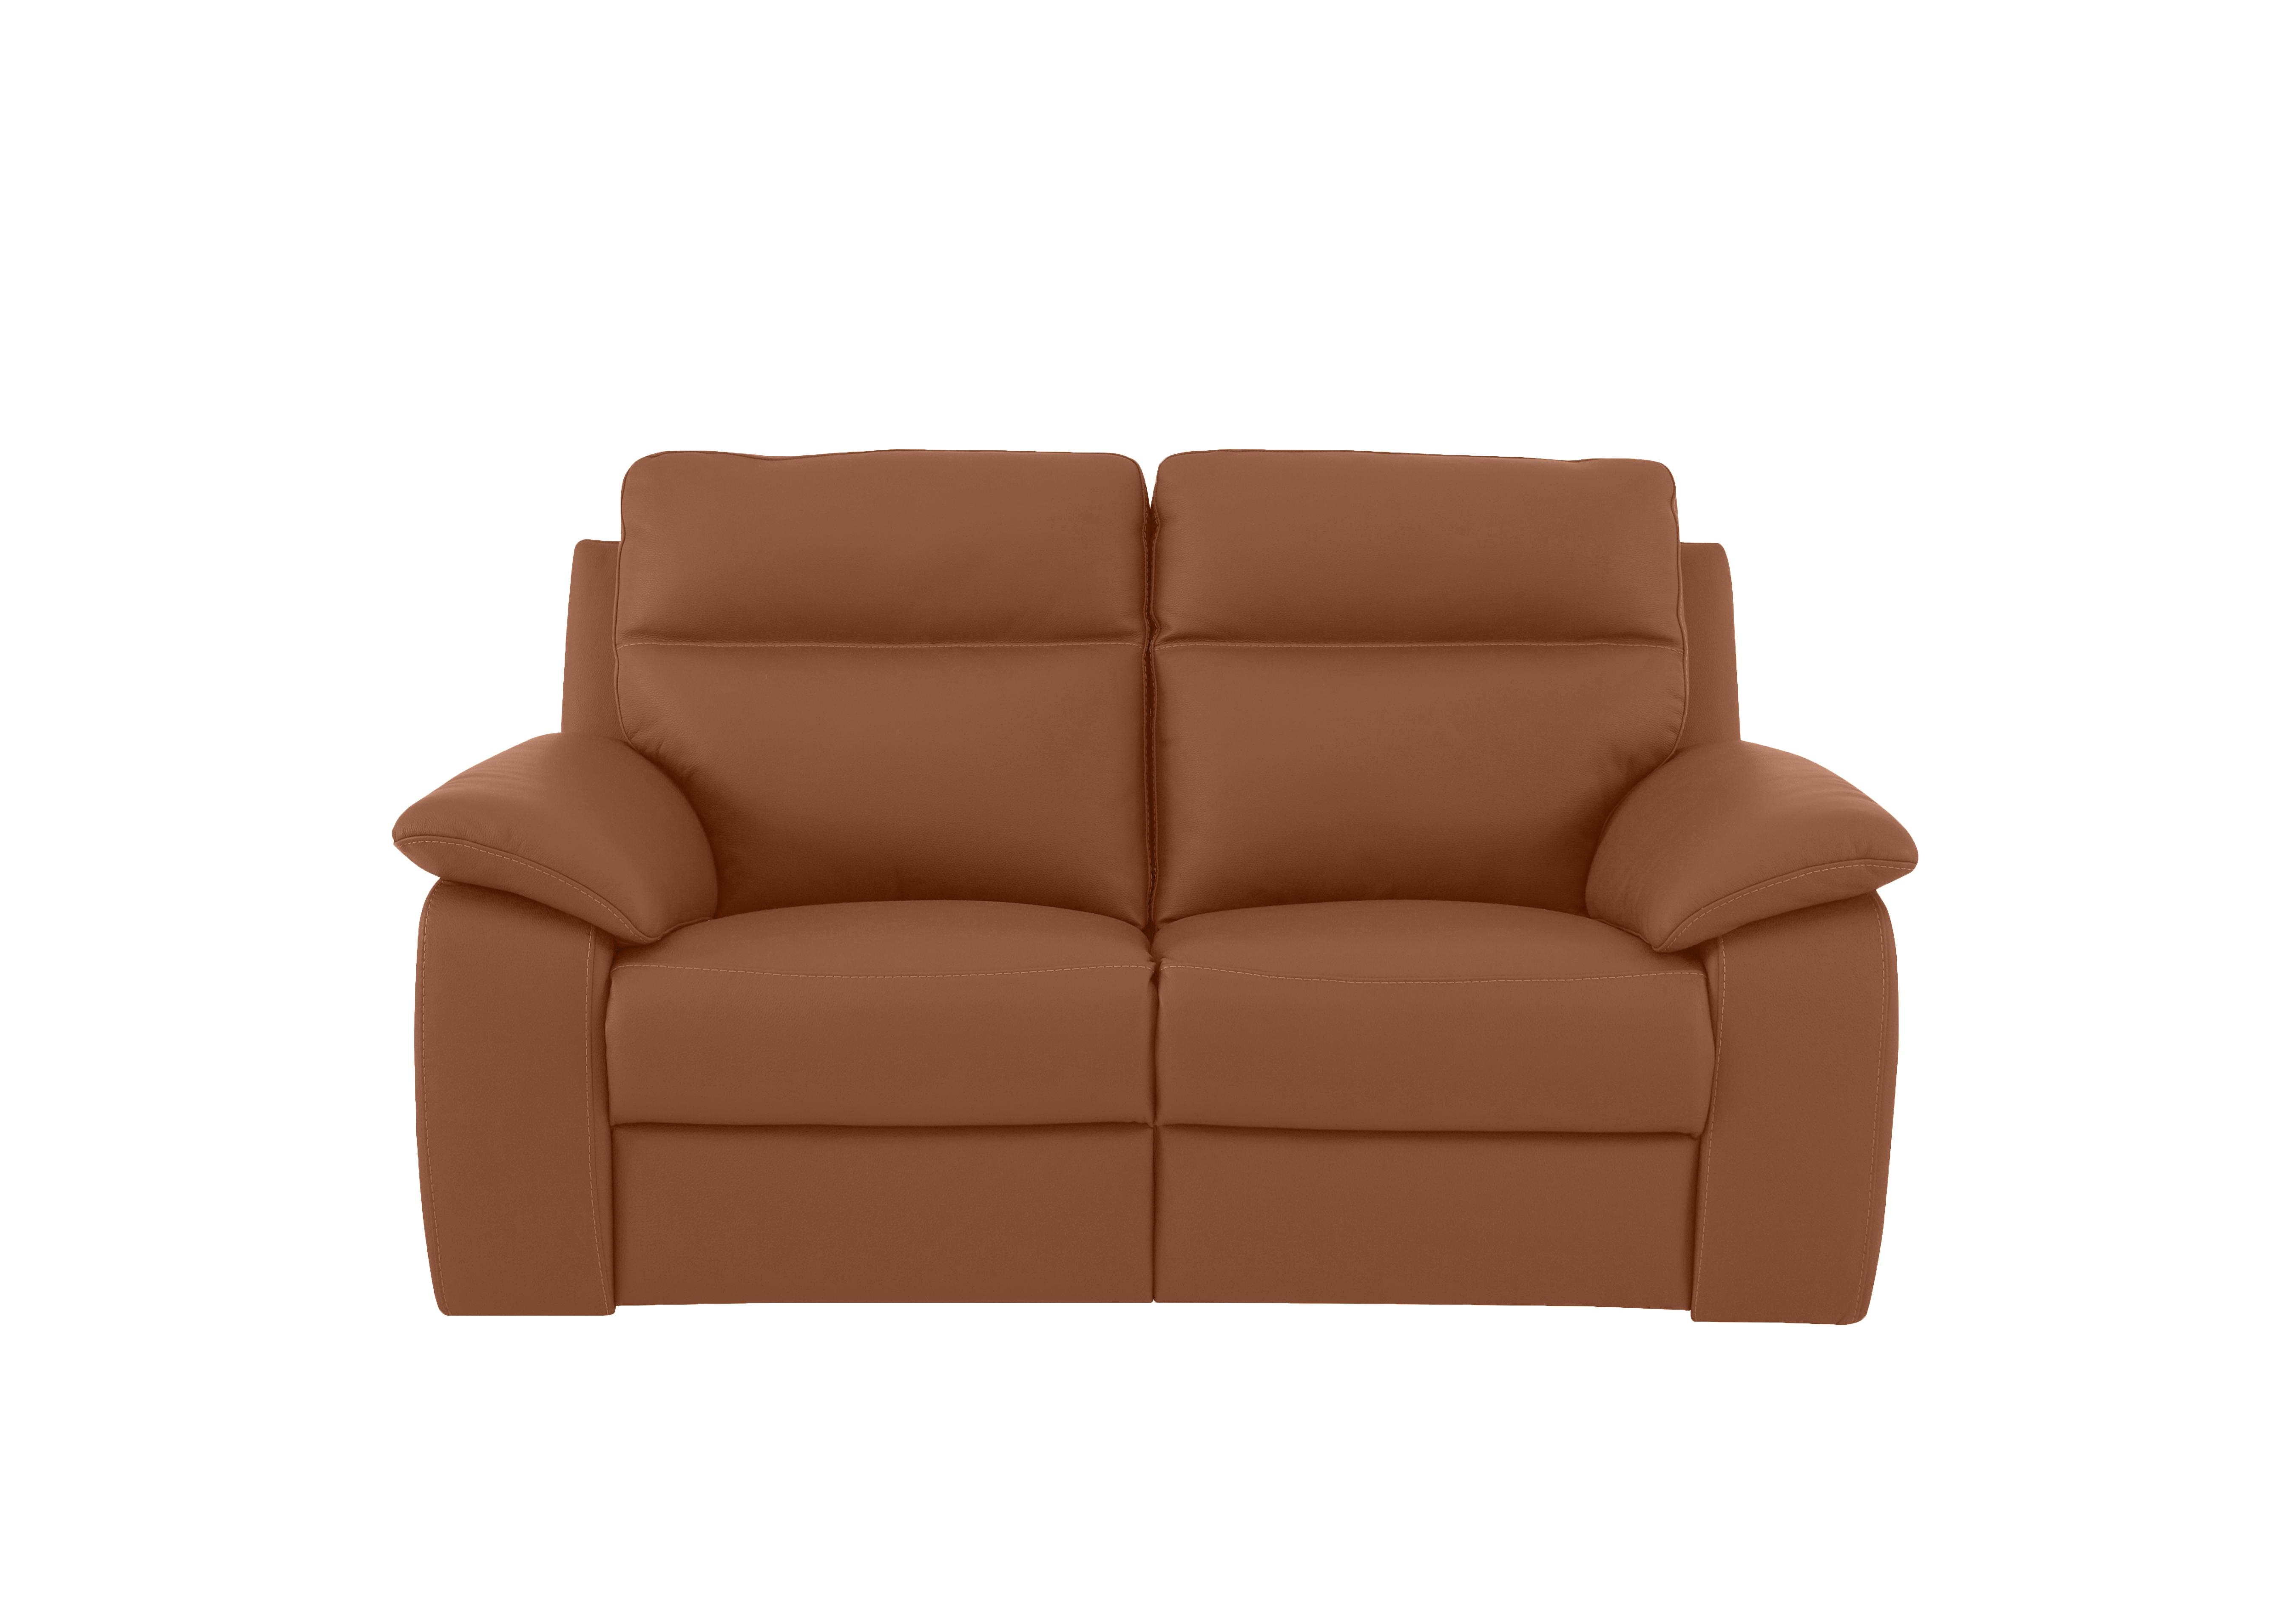 Pepino 2 Seater Leather Sofa in 363 Torello Cognac on Furniture Village